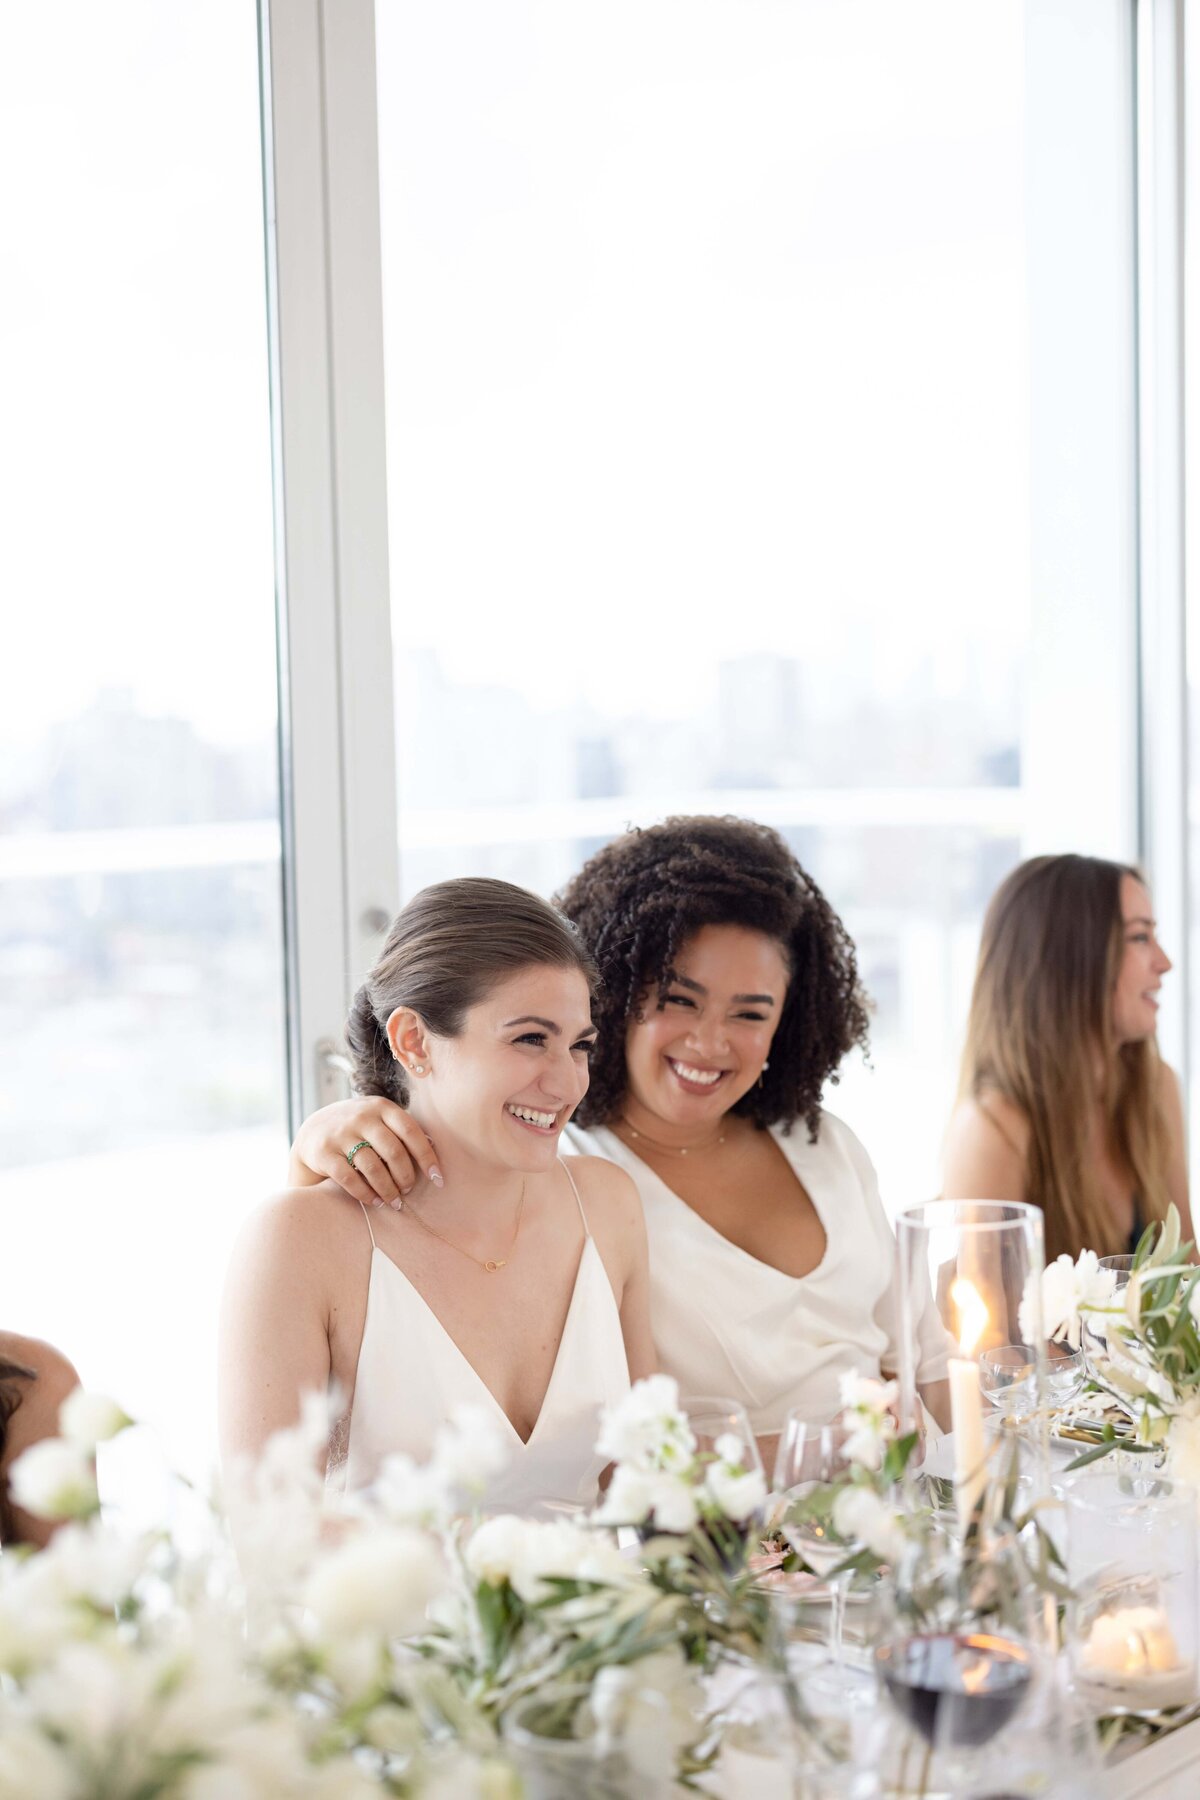 Modern NYC Wedding Brides at Sweetheart Table